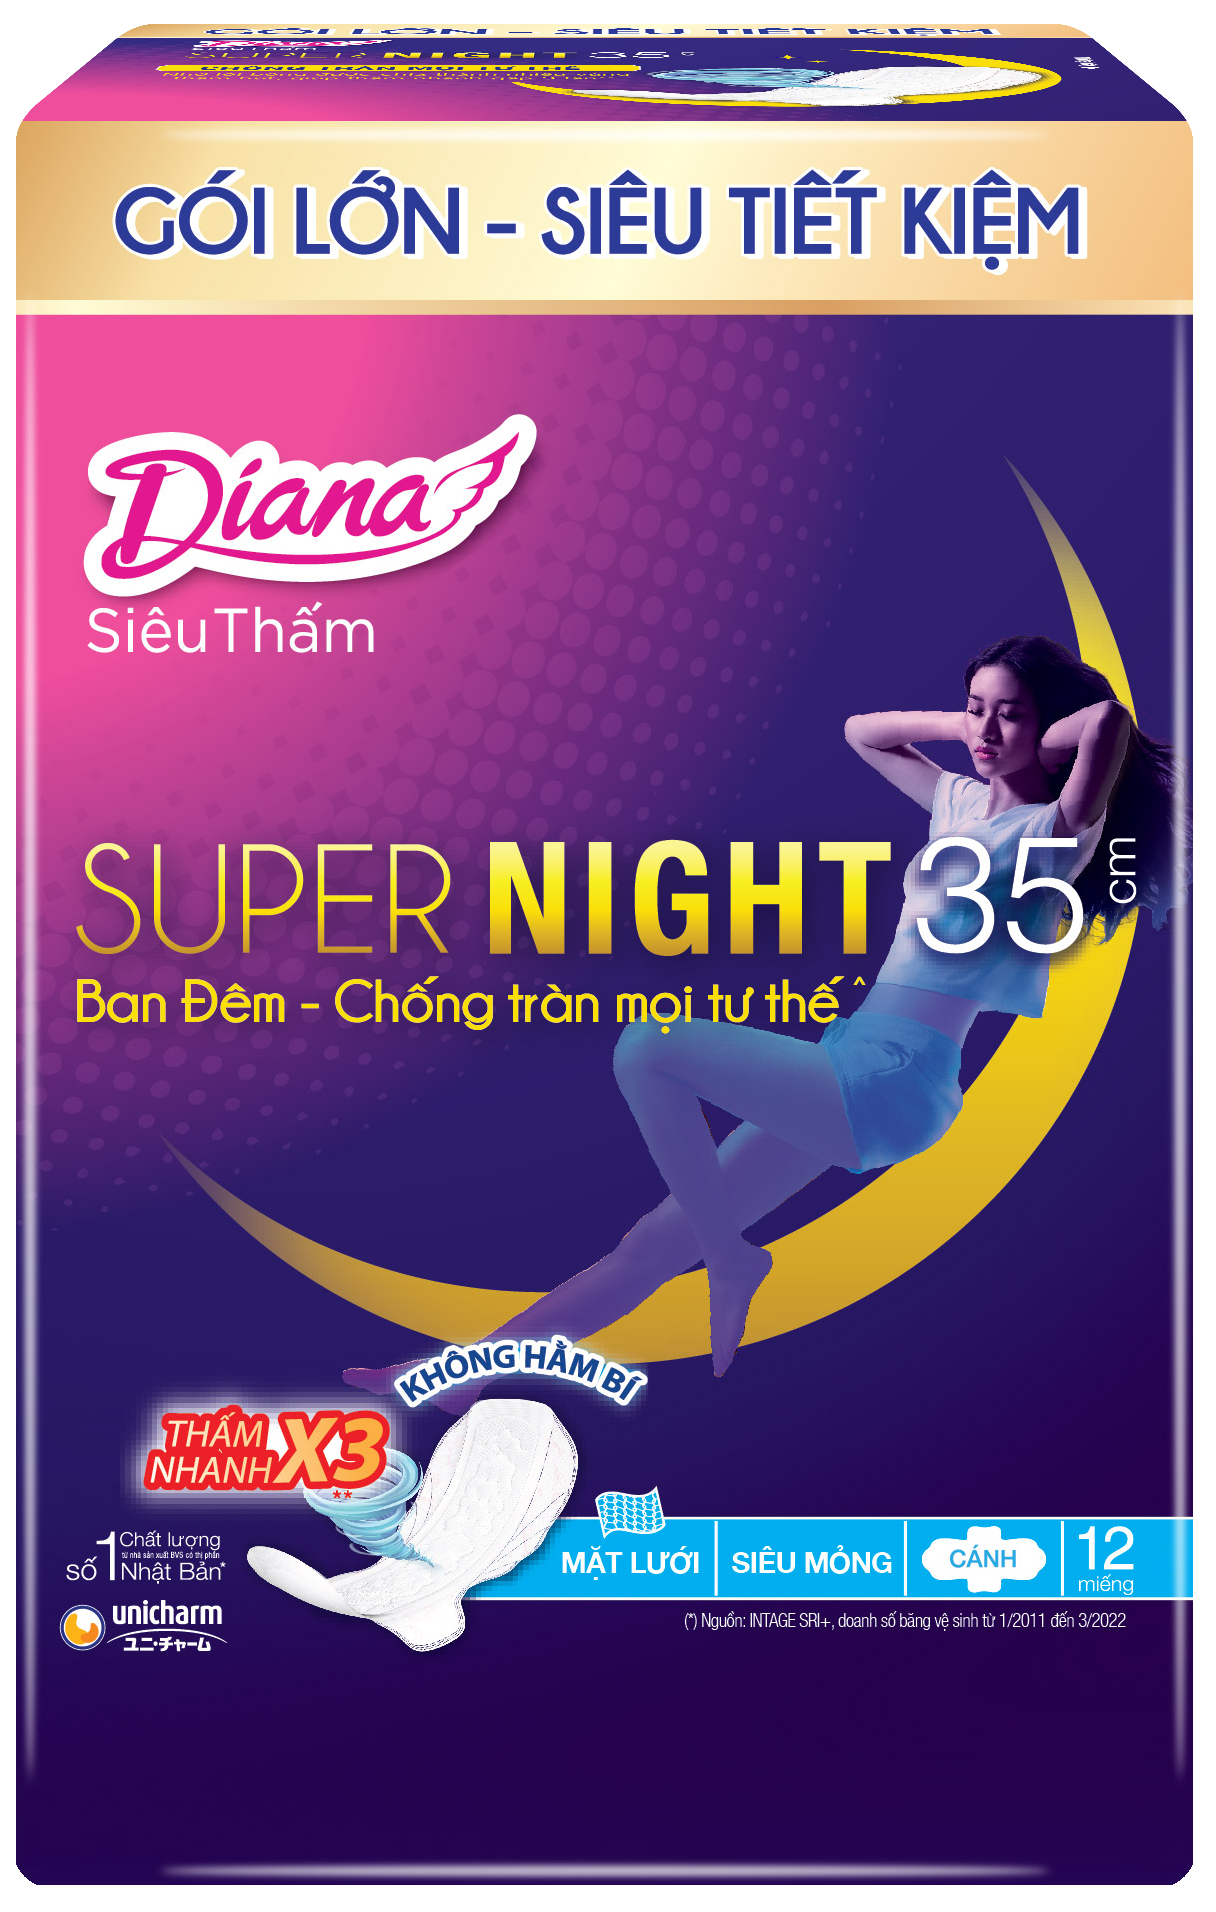 Diana Super Night Siêu Ban Đêm 35cm